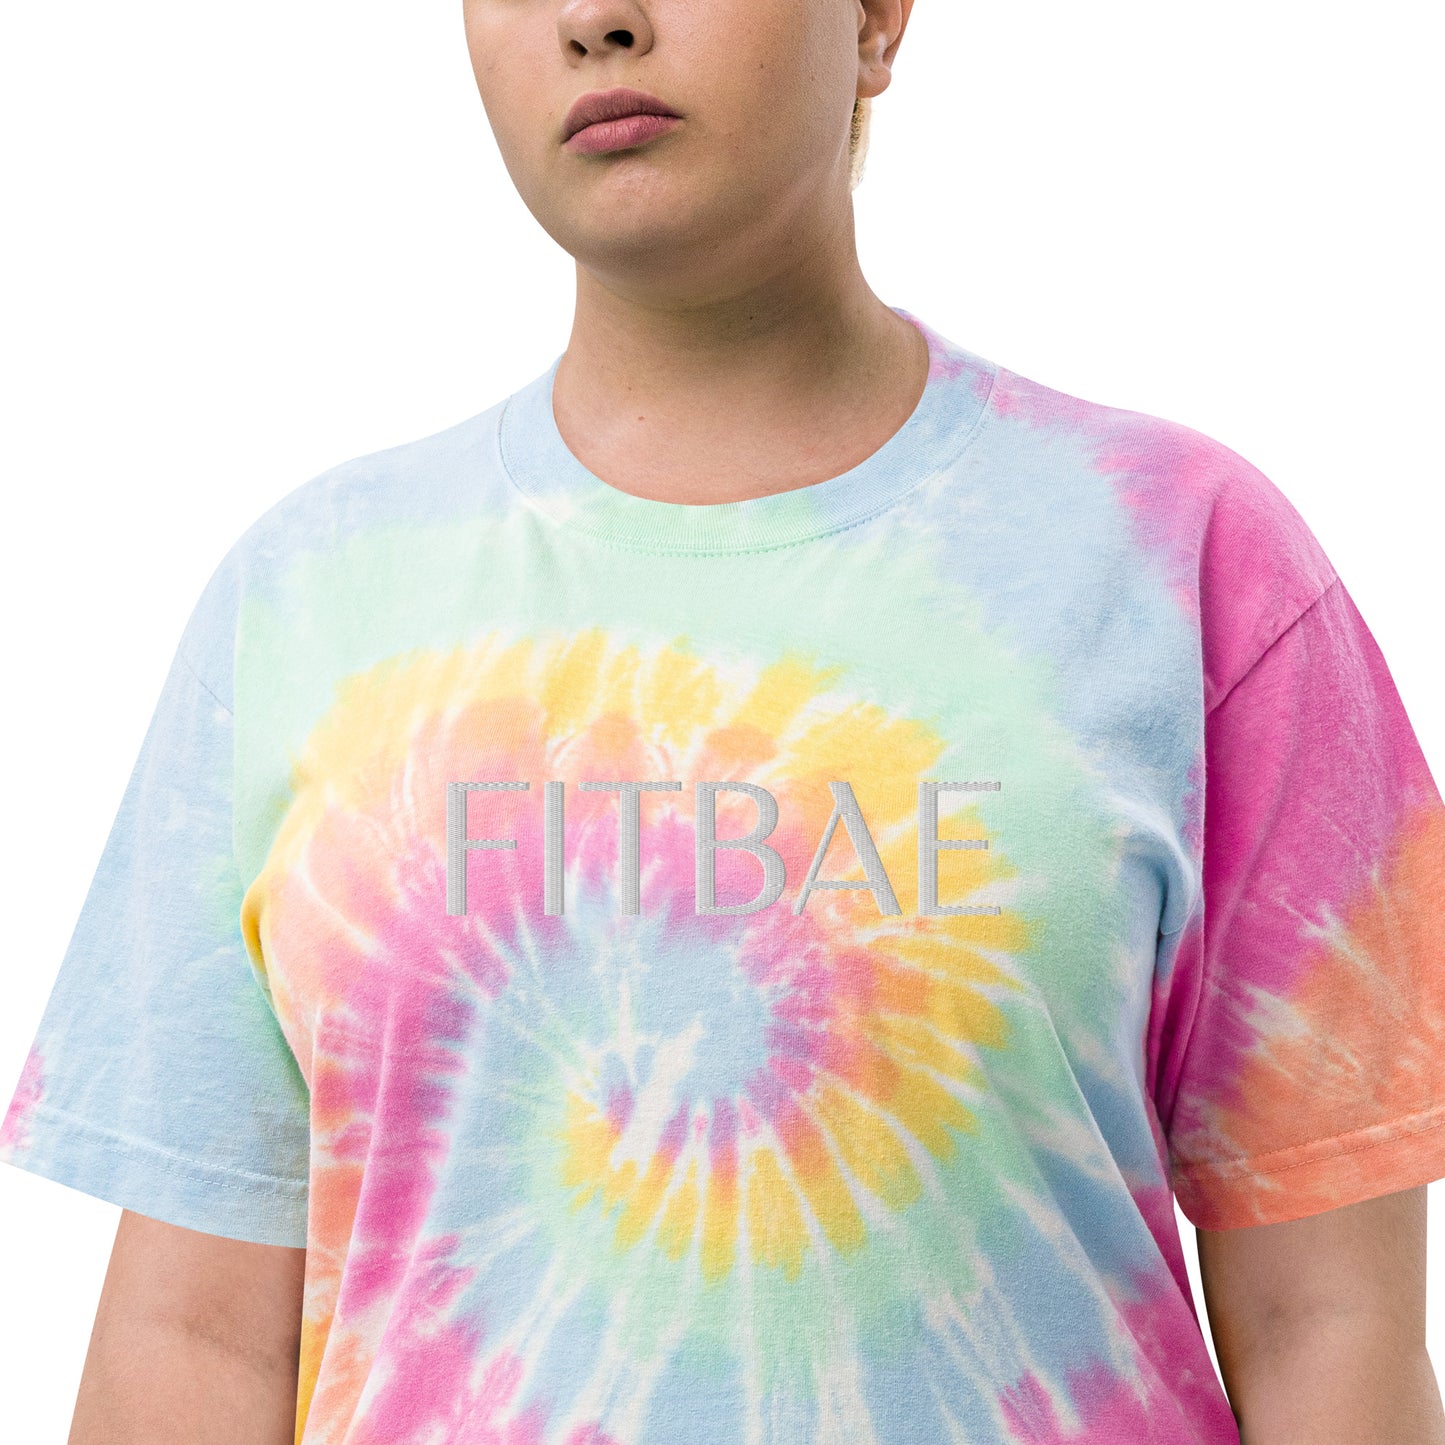 FitBae Oversized tie-dye t-shirt